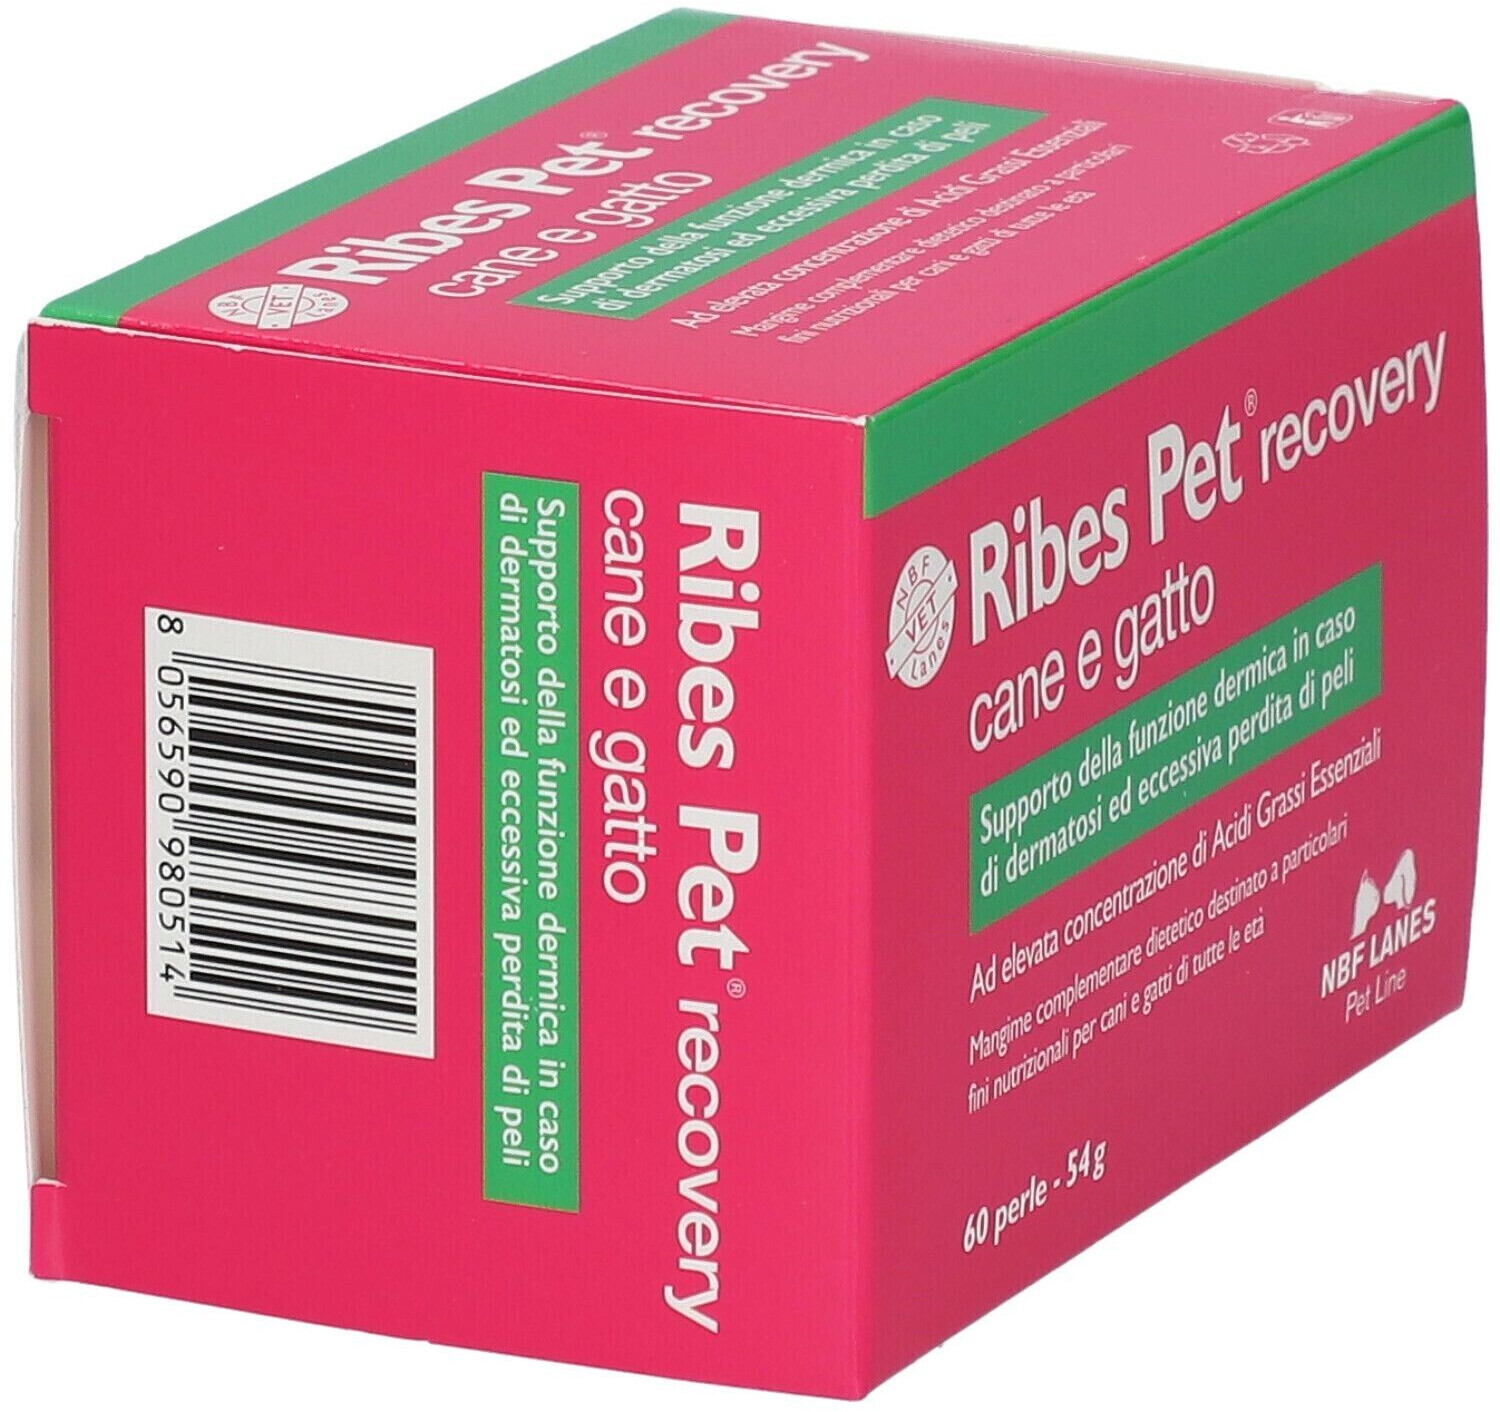 NBF Lanes Ribes Pet Recovery (60 prl) a € 21,42 (oggi)